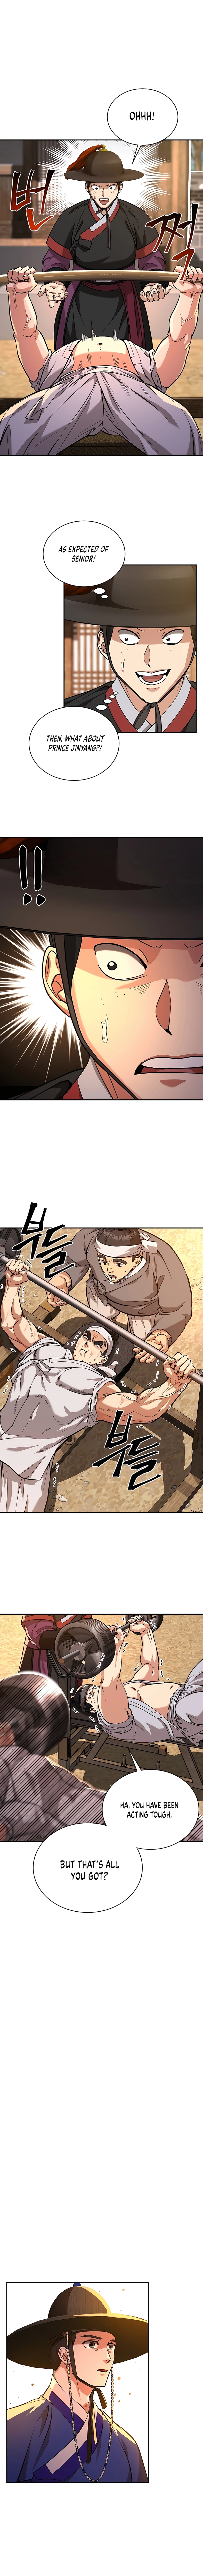 Muscle Joseon, Chapter 6 image 11